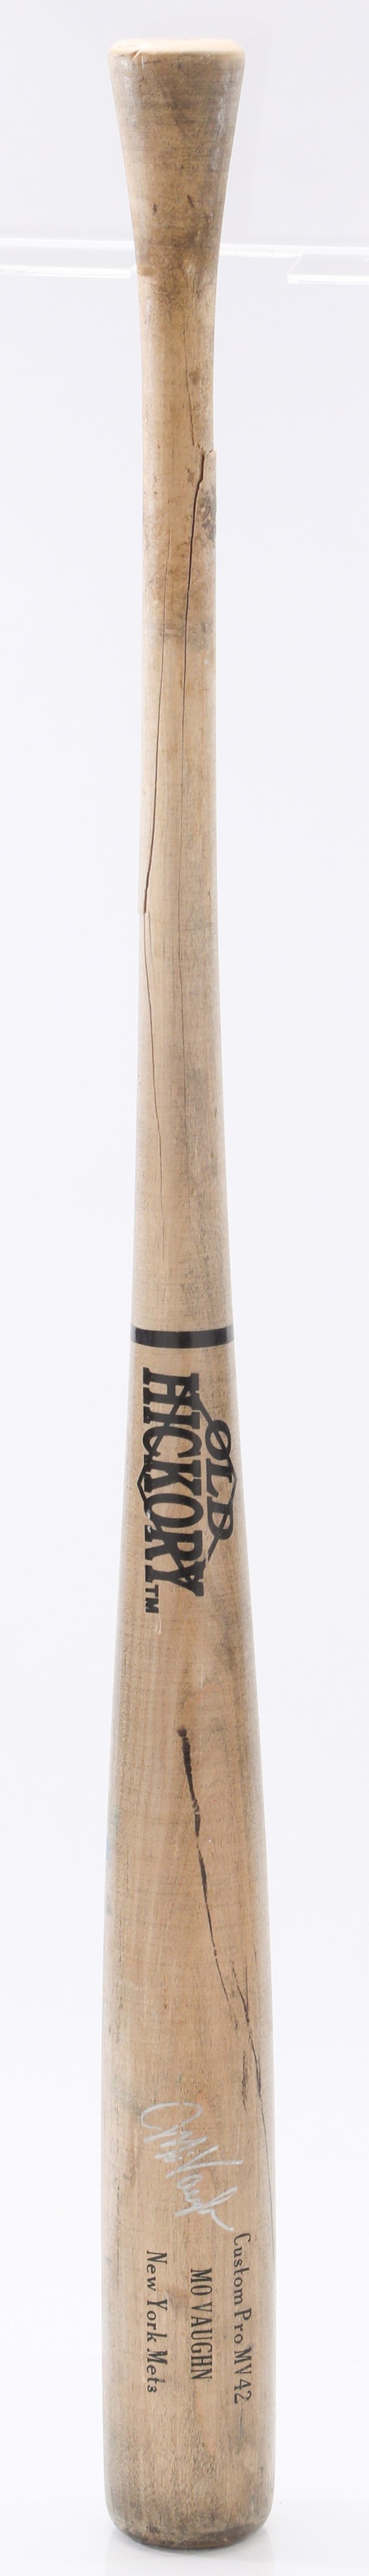 Mo Vaughn Cracked Autographed Baseball Bat